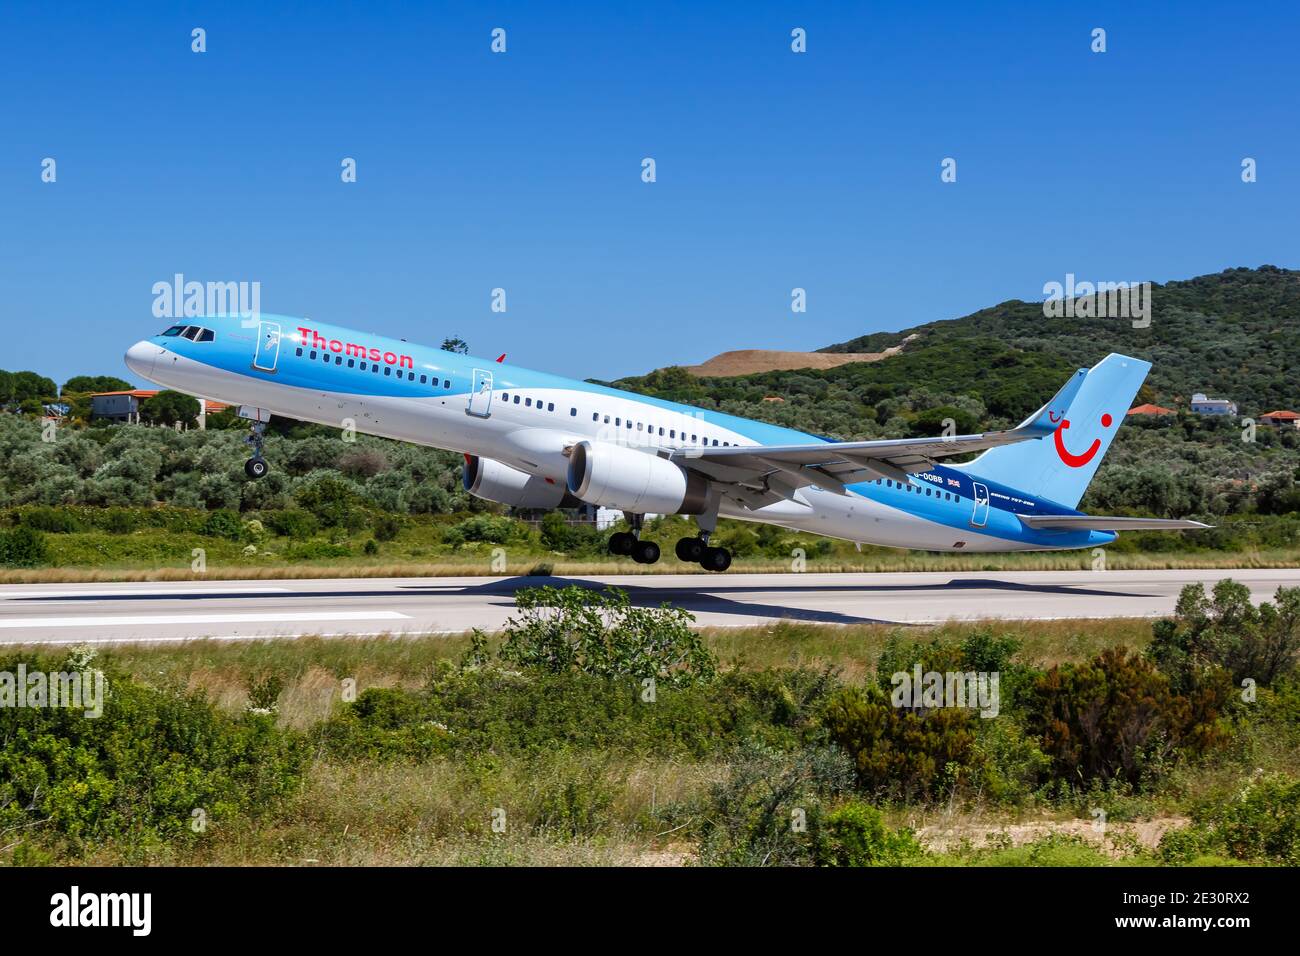 Skiathos, Greece - June 3, 2016: Thomson Airways Boeing 757-200 airplane at Skiathos Airport (JSI) in Greece. Boeing is an American aircraft manufactu Stock Photo